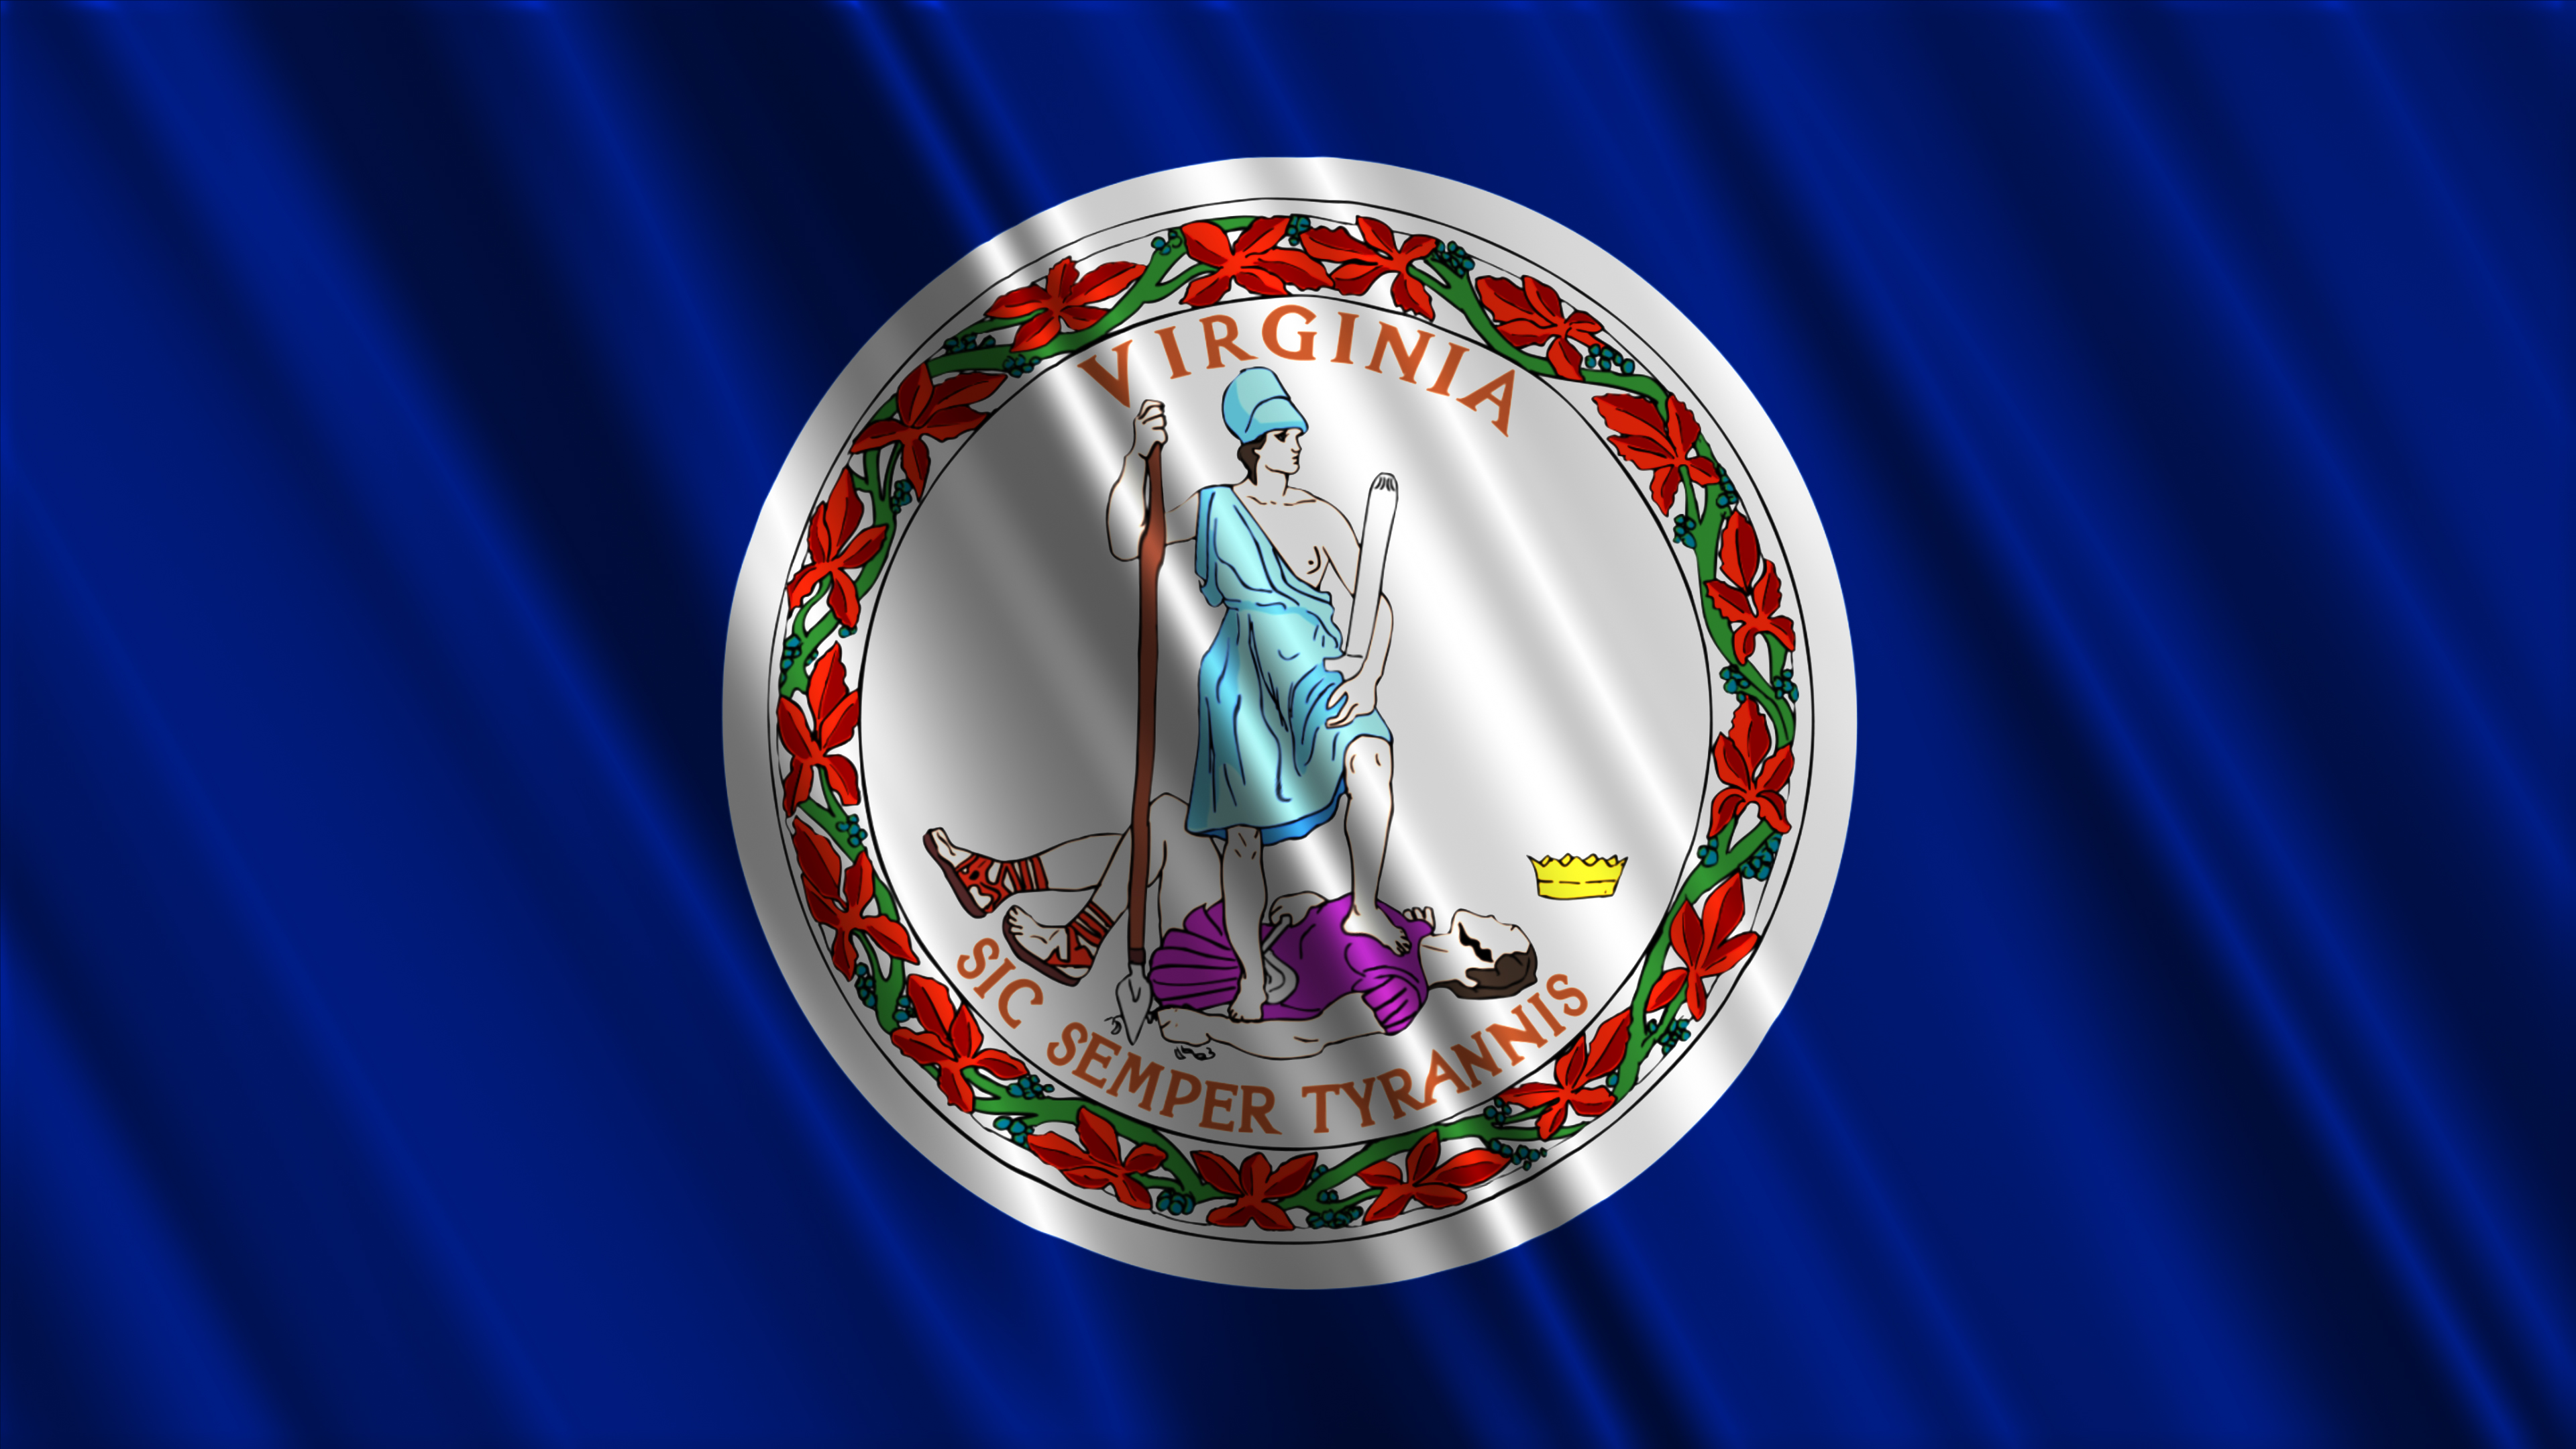 Virginie flag